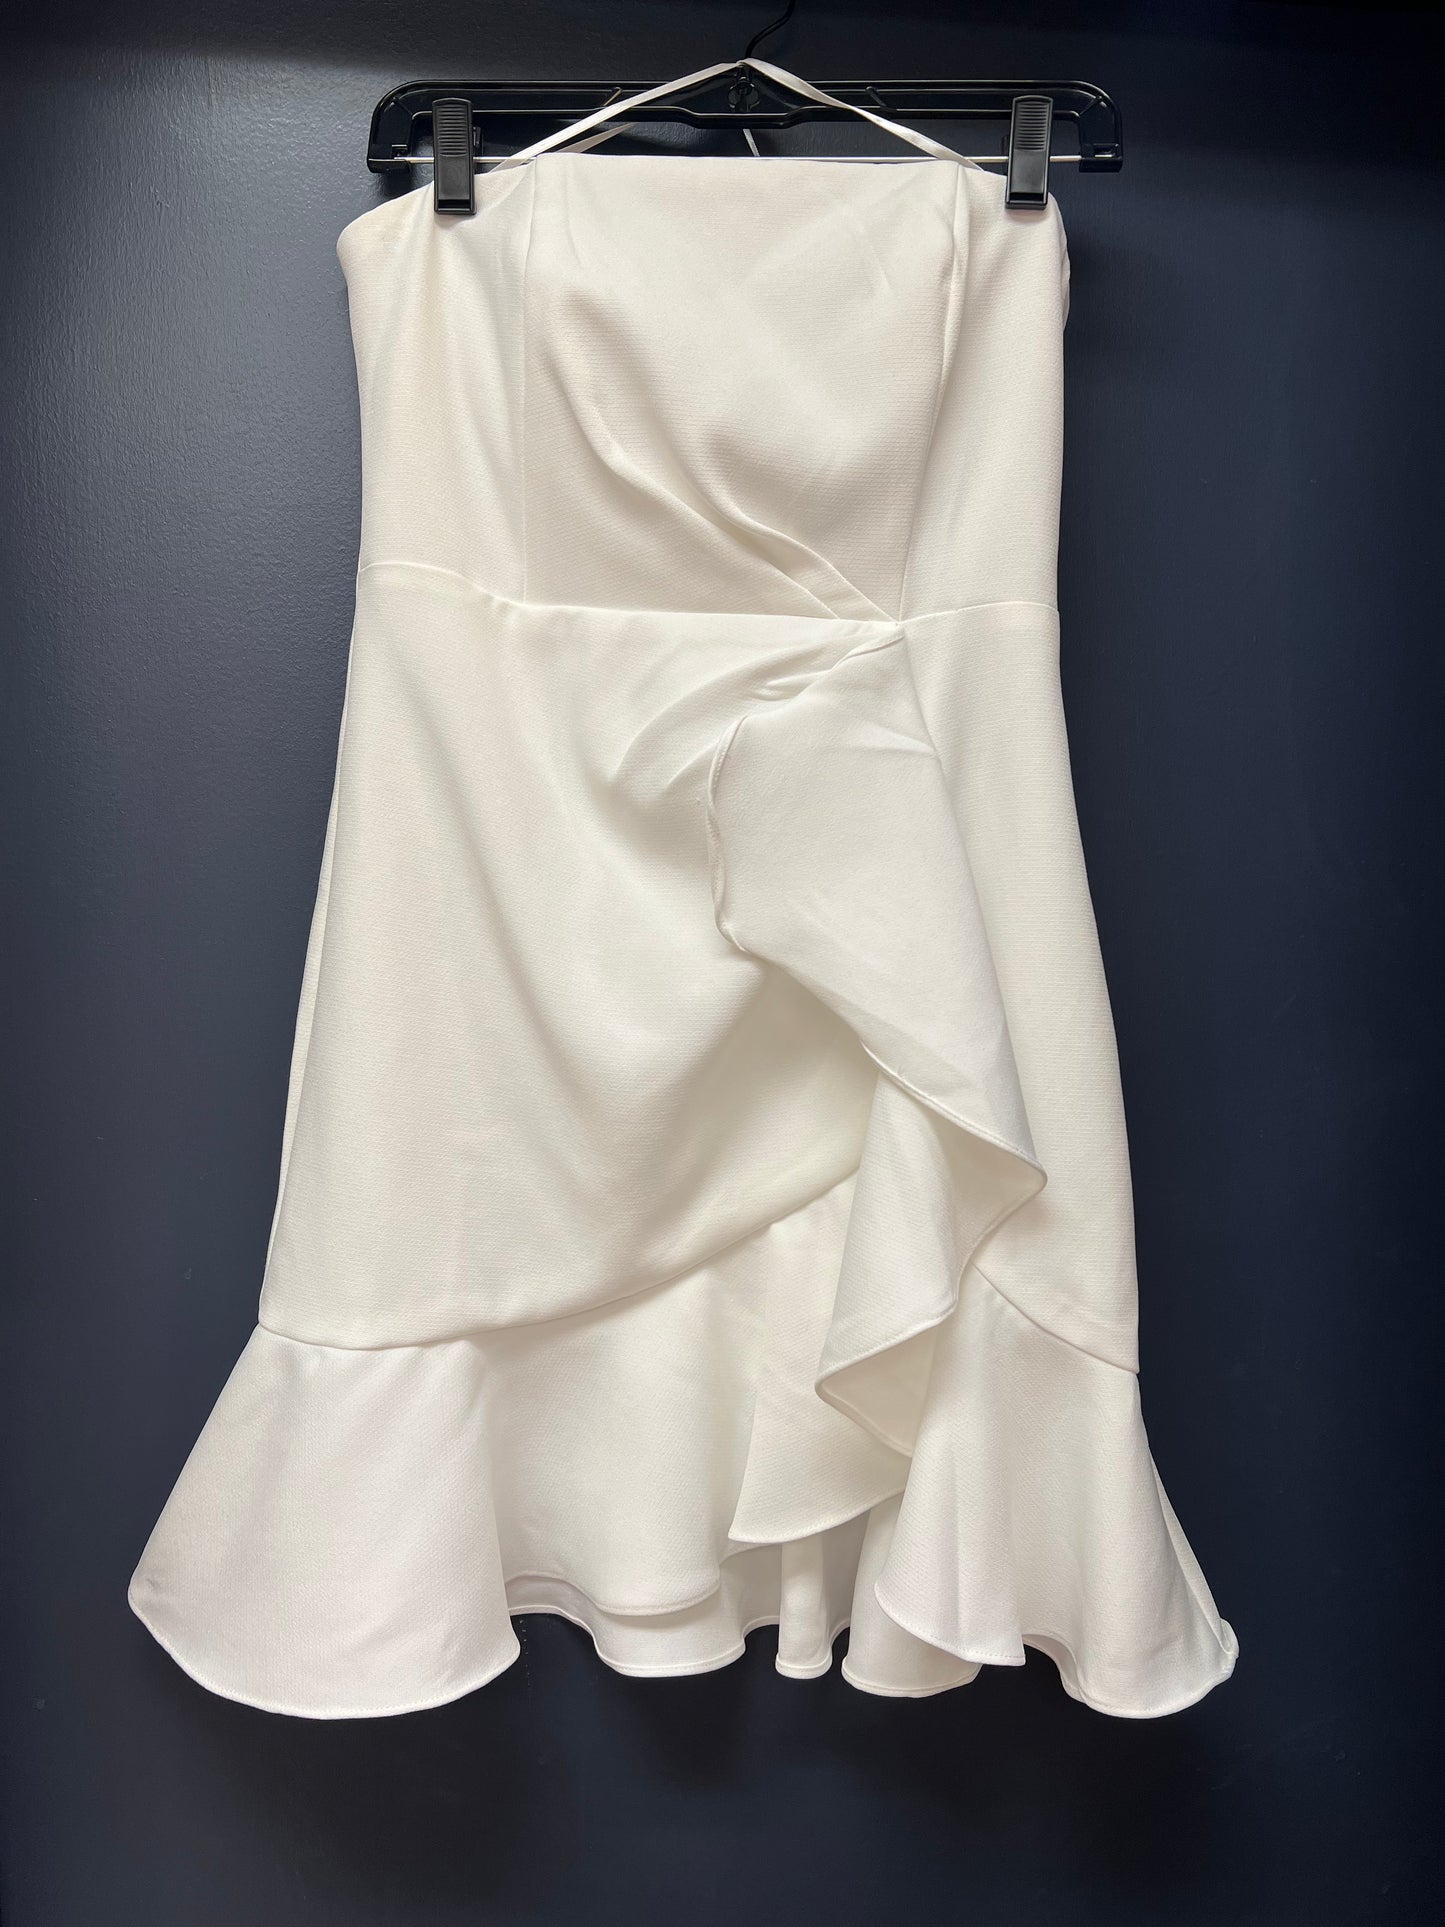 Apparel- Do+Be White Strapless Ruffle Dress